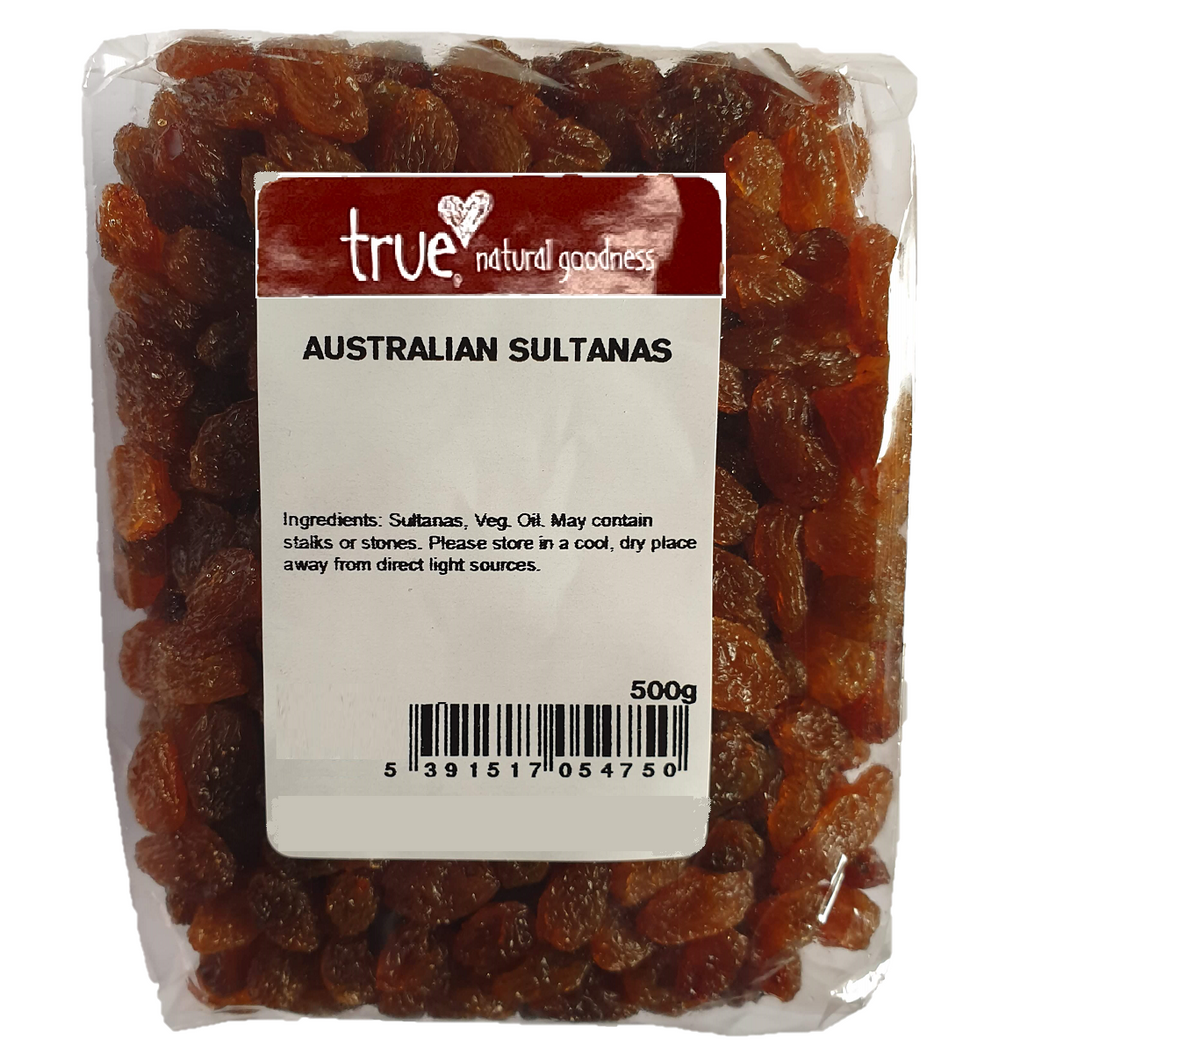 True Natural Goodness Australian Sultanas 500g